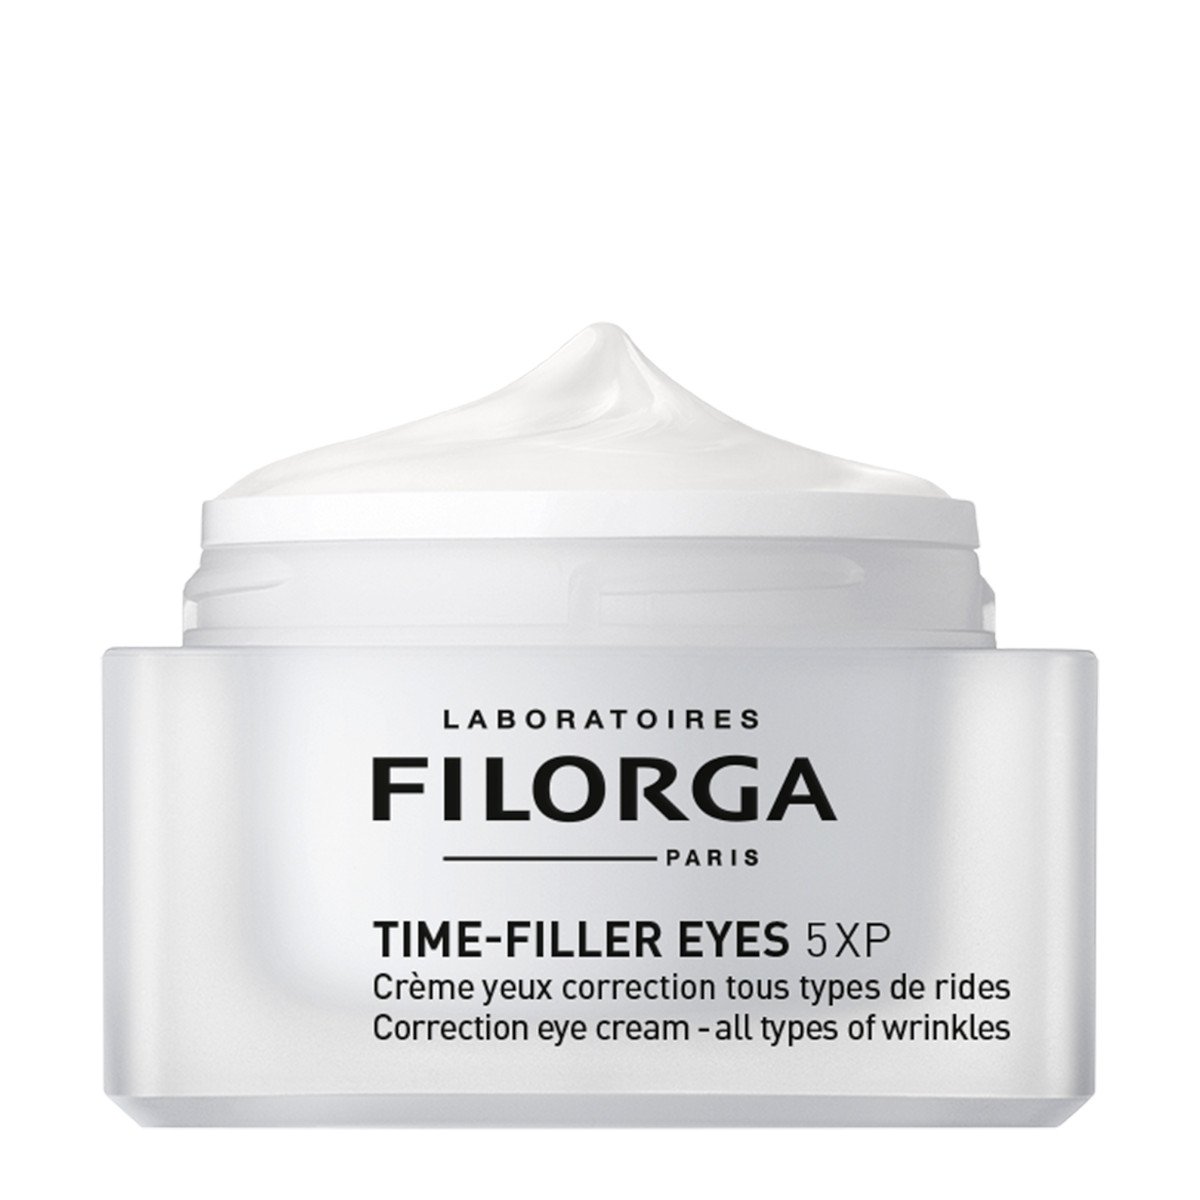 Тайм-филлер Filorga Time-filler eyes 5ХР cream, 15 мл - фото 1